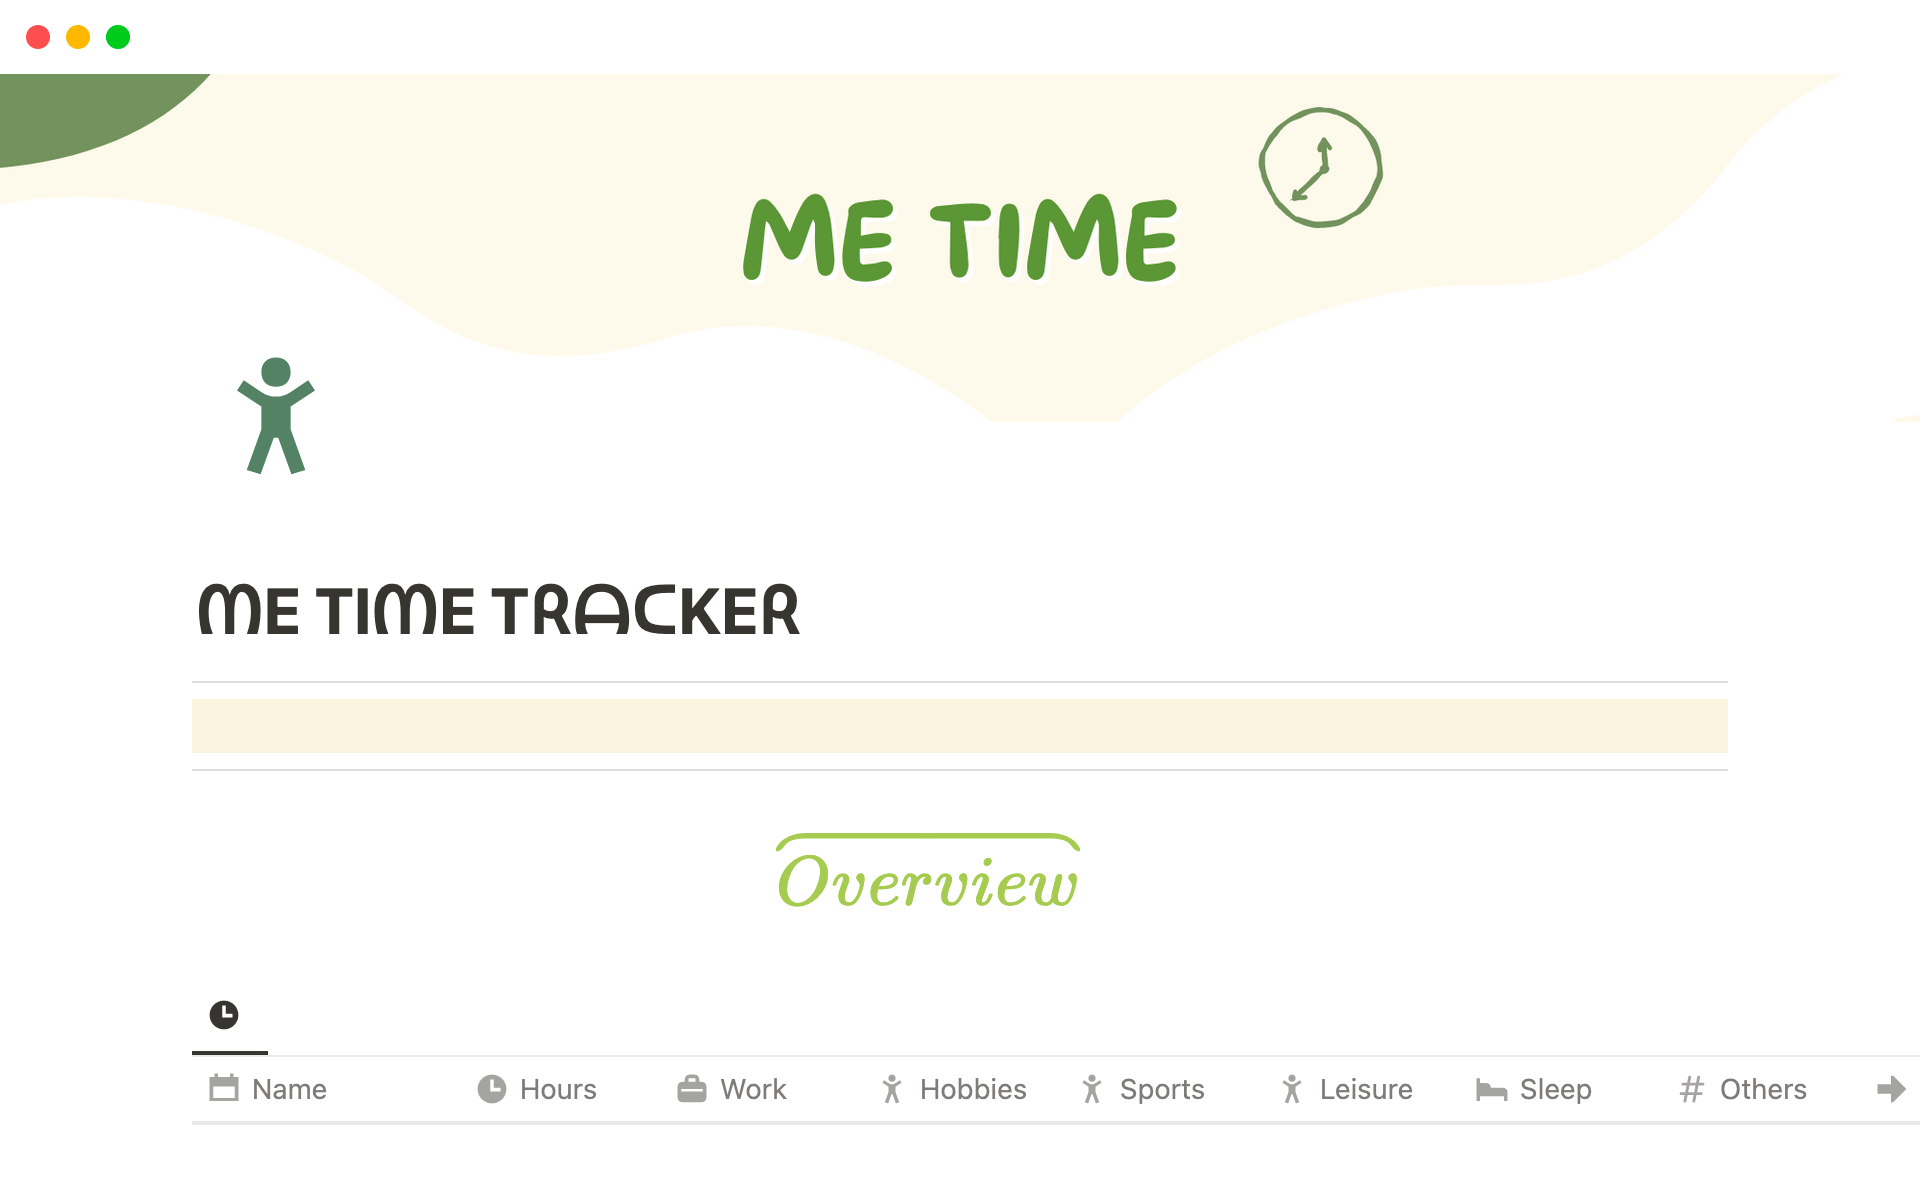 Aperçu du modèle de Me Time Tracker